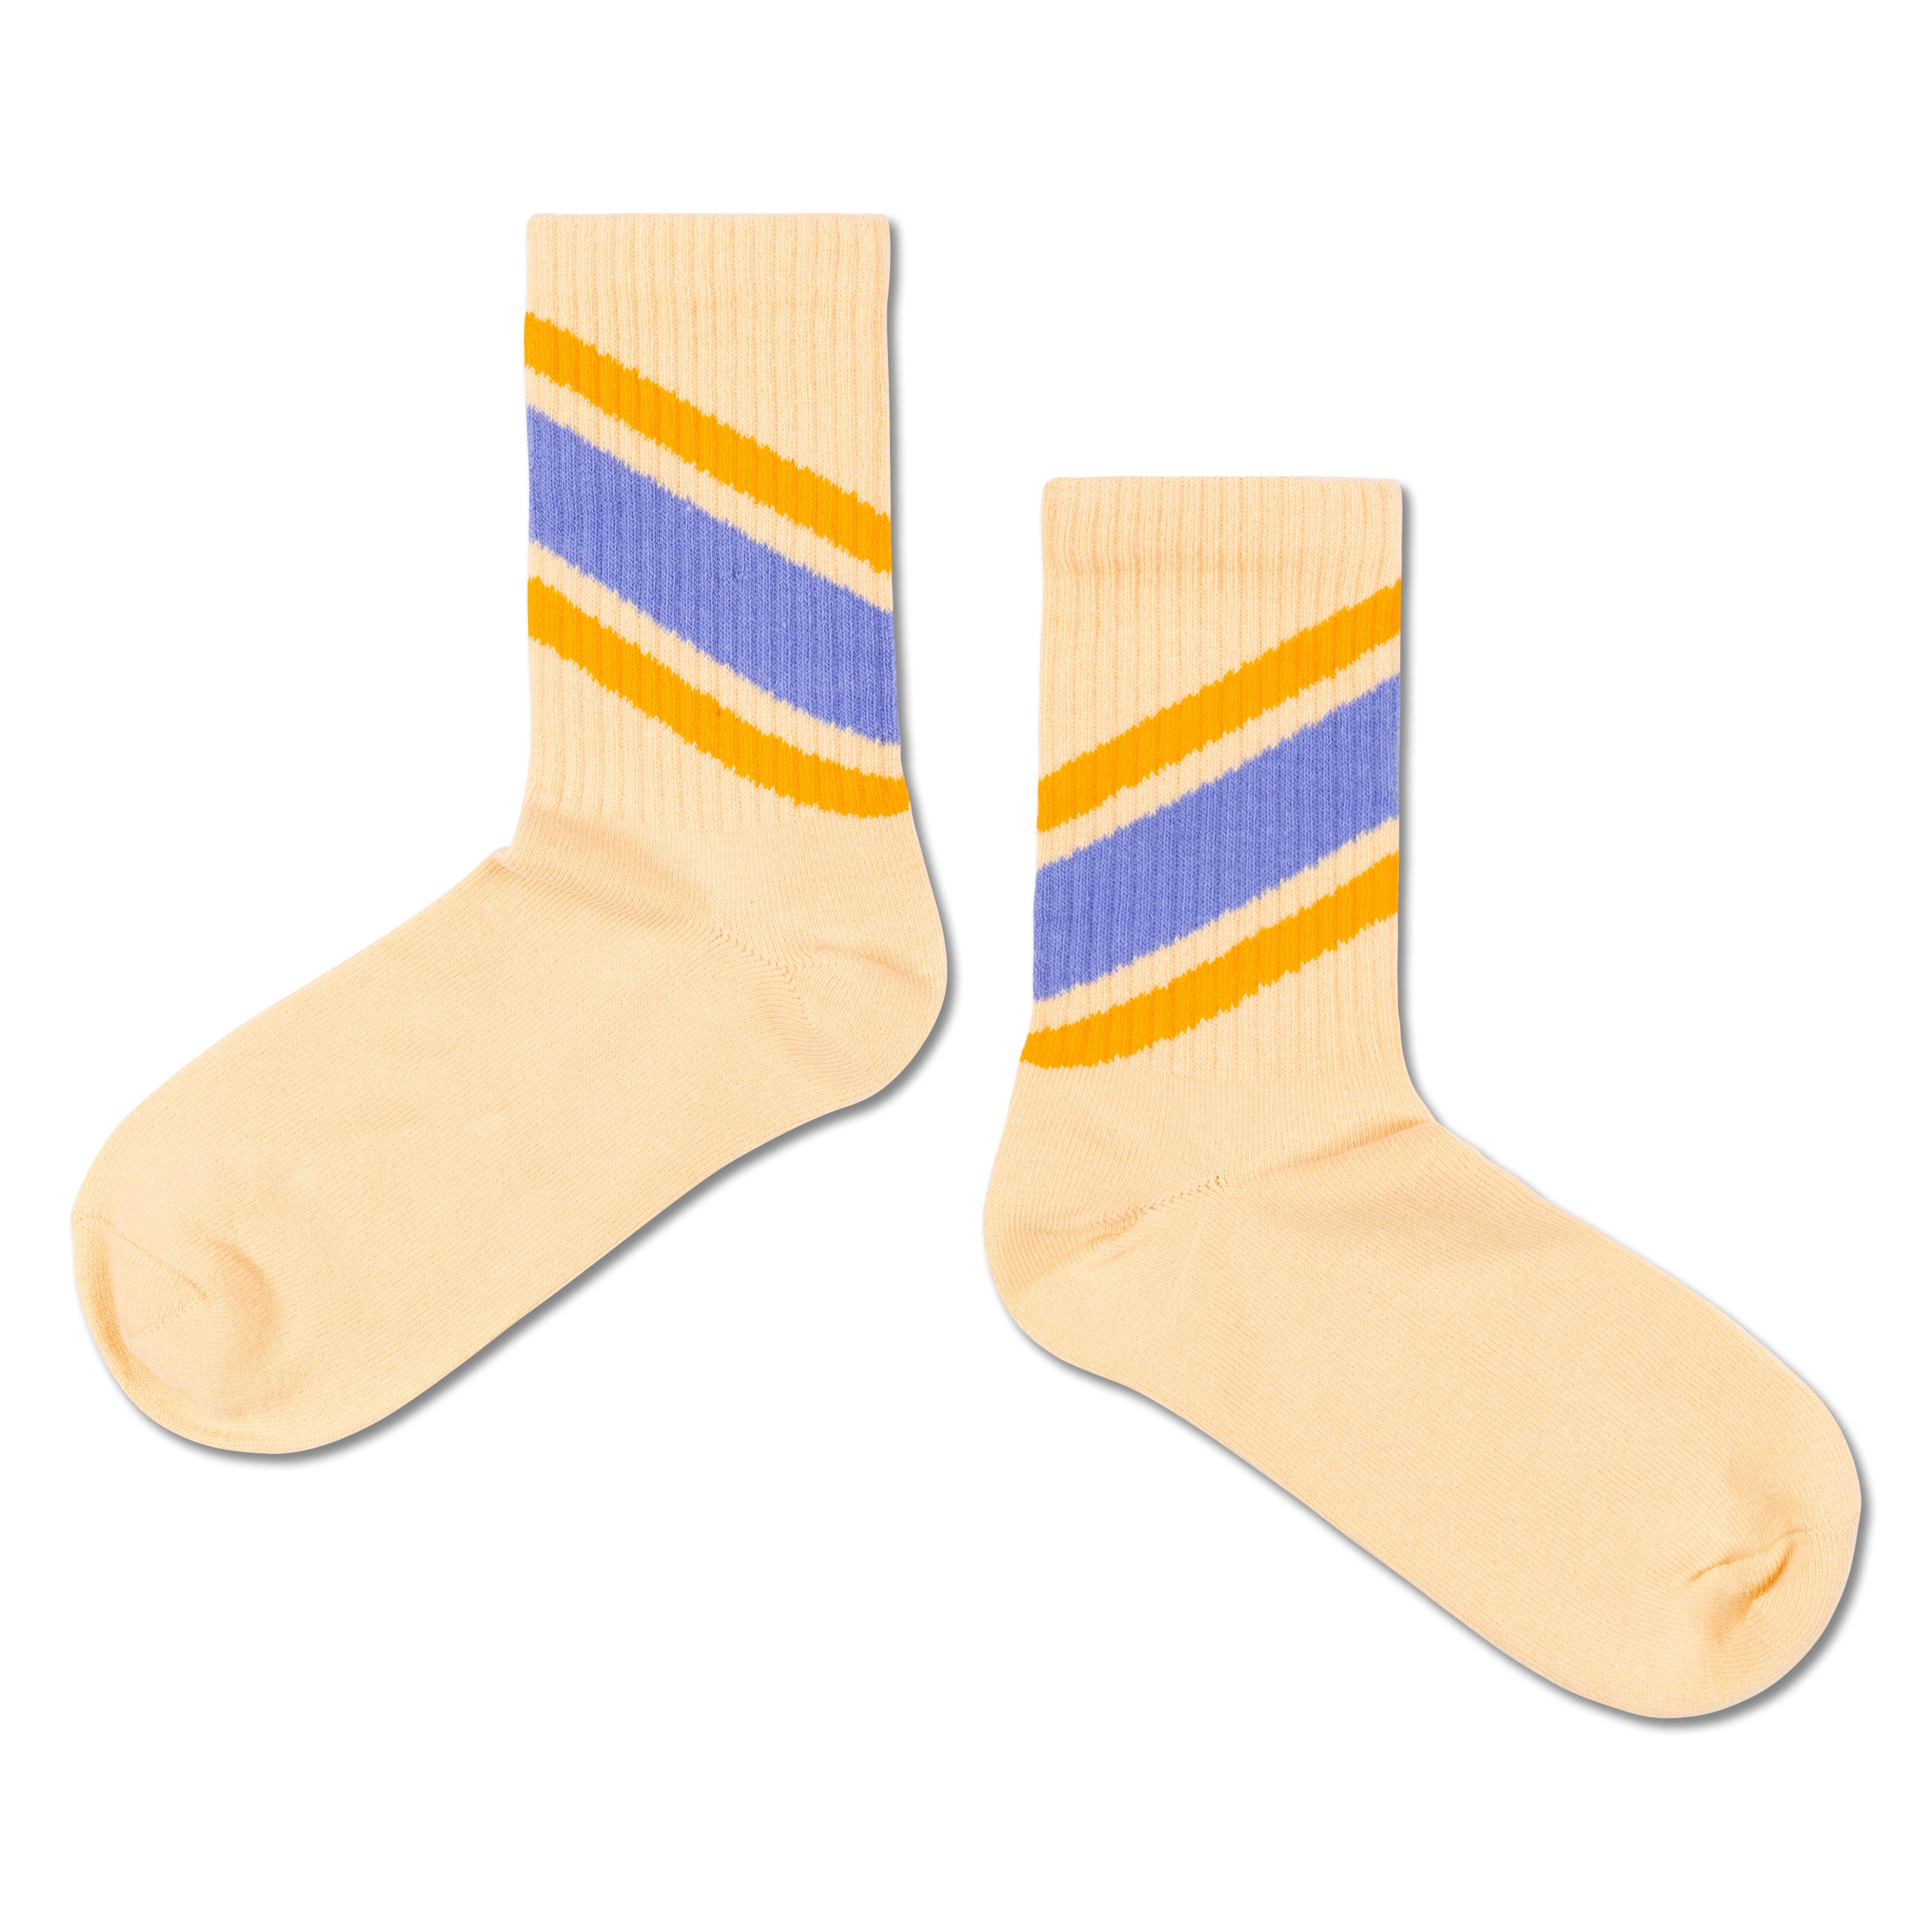 REPOSE / Sporty socks